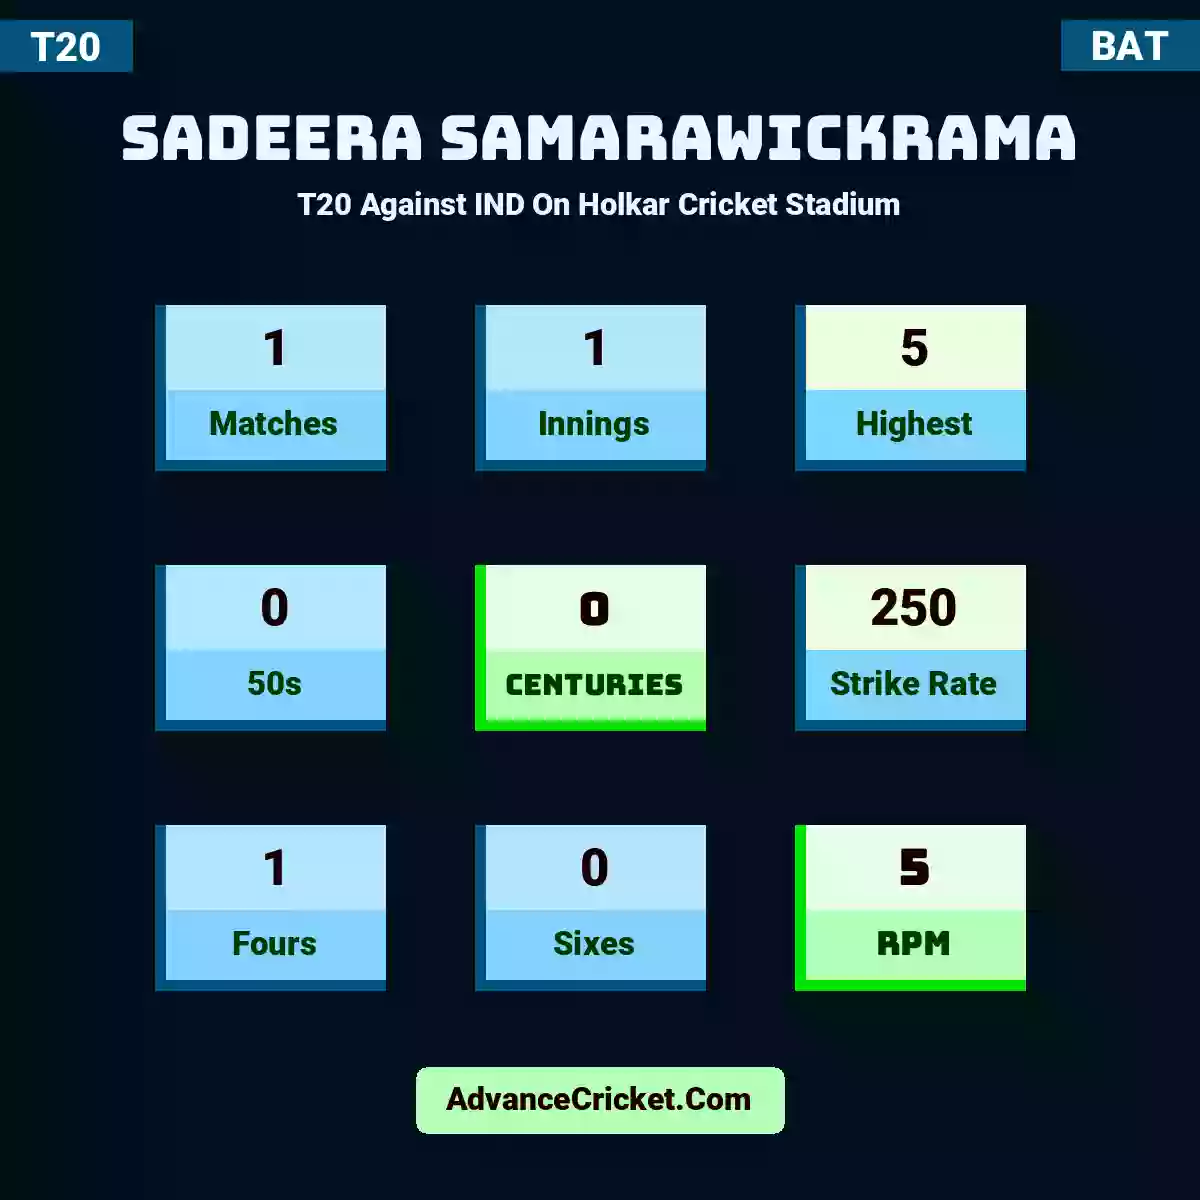 Sadeera Samarawickrama T20  Against IND On Holkar Cricket Stadium, Sadeera Samarawickrama played 1 matches, scored 5 runs as highest, 0 half-centuries, and 0 centuries, with a strike rate of 250. S.Samarawickrama hit 1 fours and 0 sixes, with an RPM of 5.